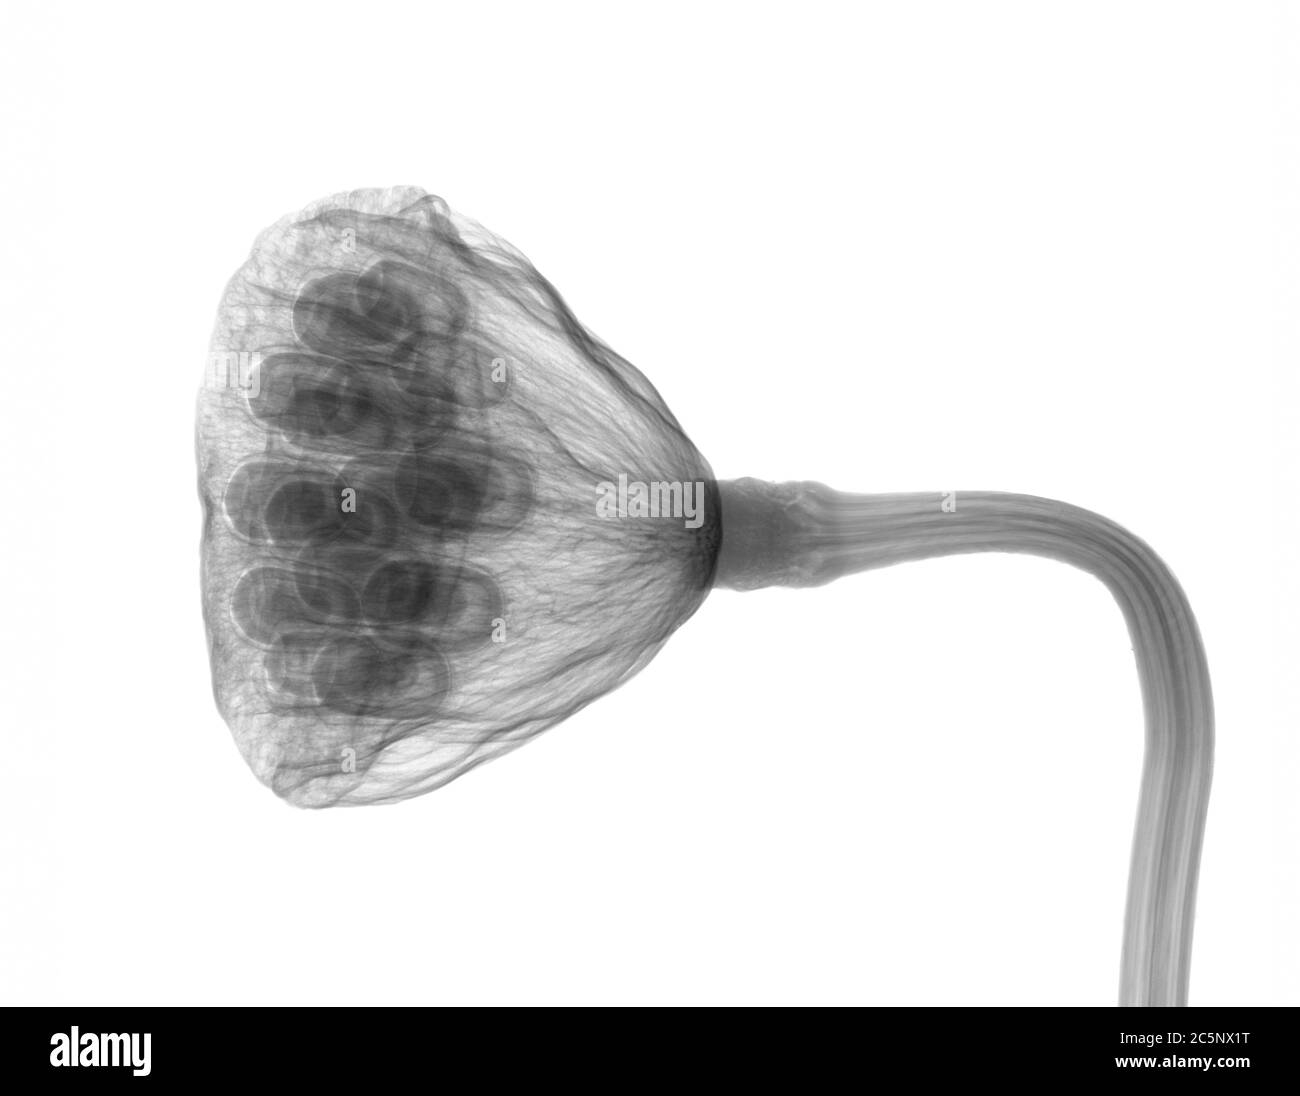 Lotus seed head, X-ray. Stock Photo